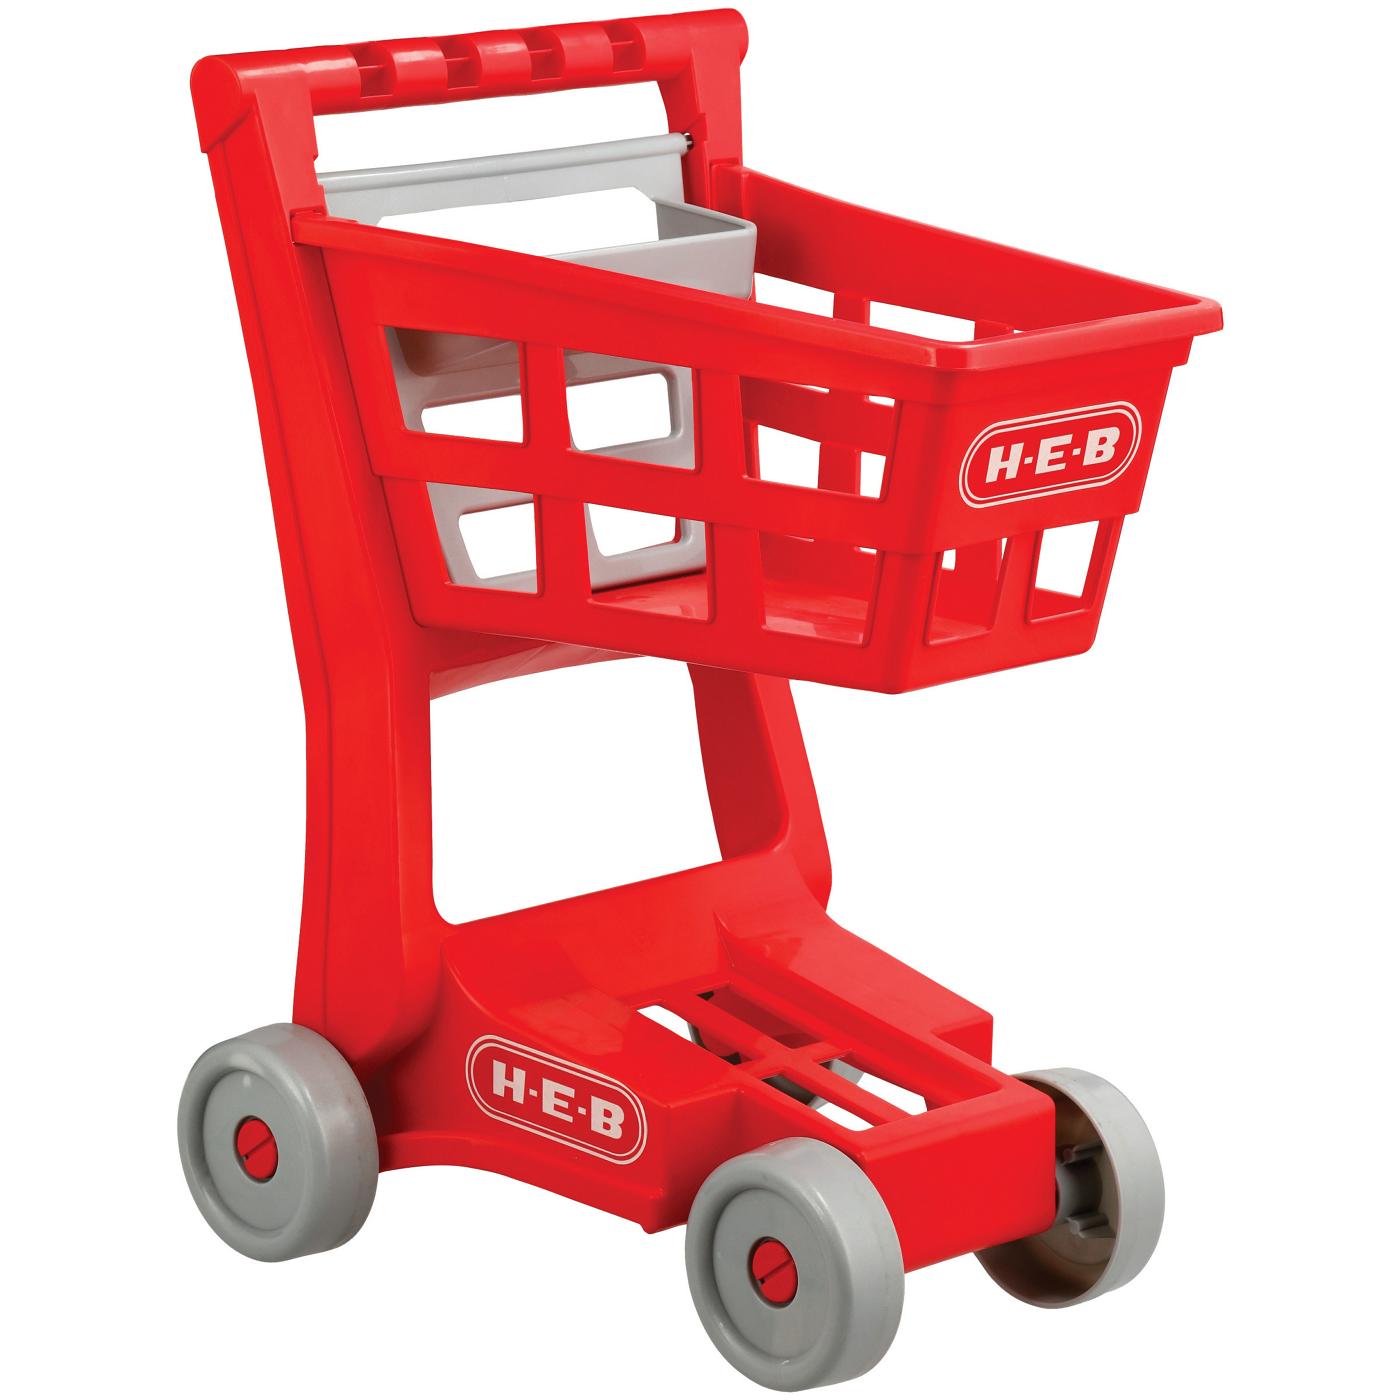 H-E-B Kids Reusable Shopping Cart - Red; image 1 of 2